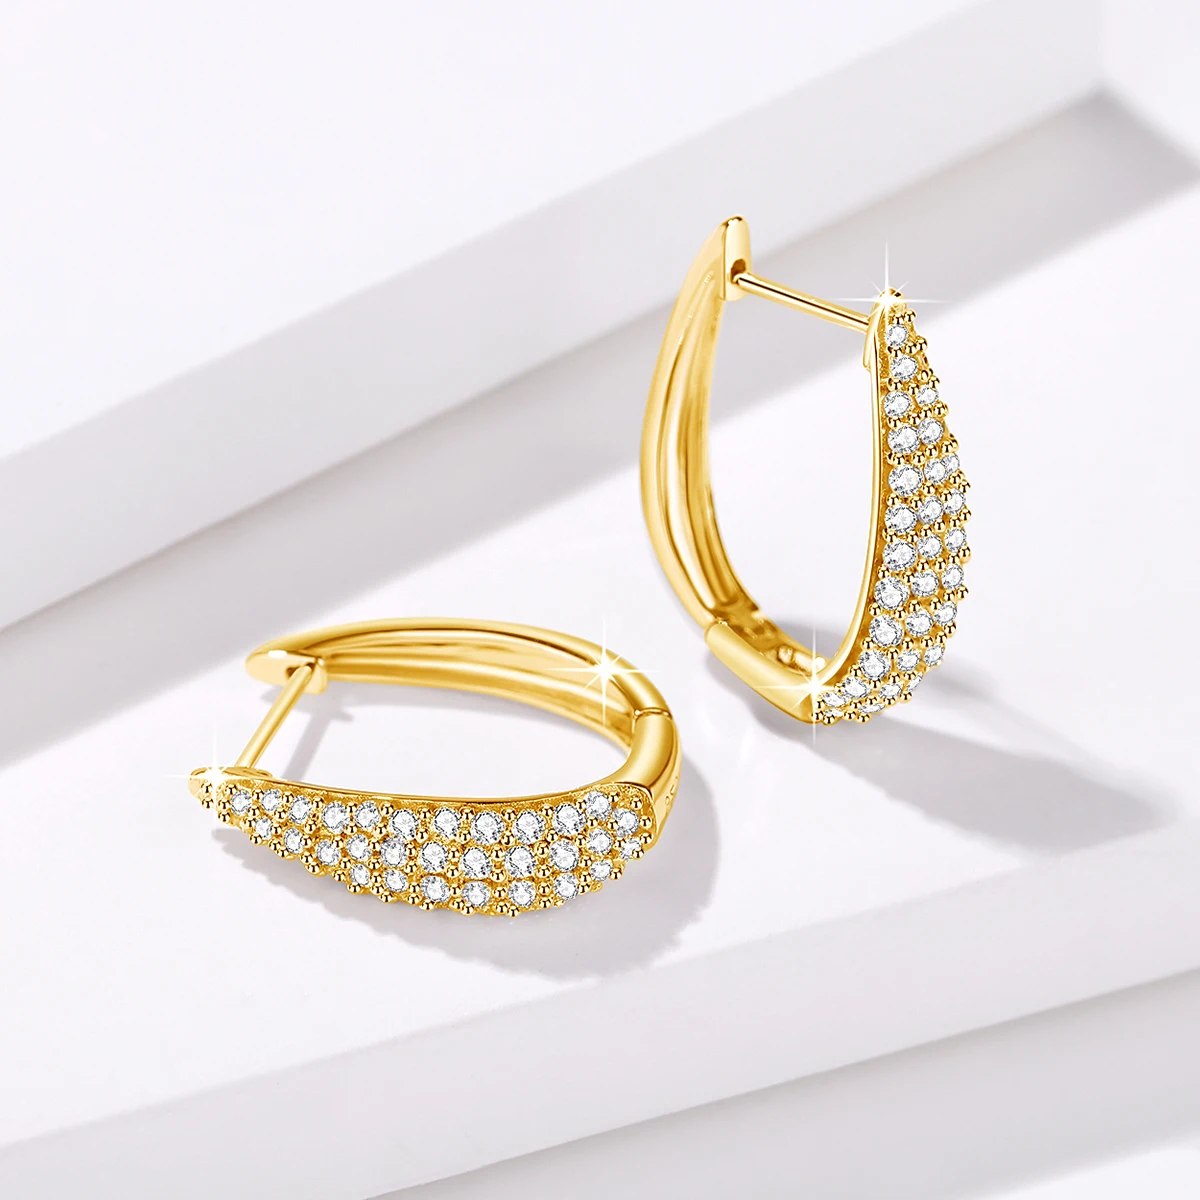 

Yellow Gold U Shape Earrings Moisanite With Certificate Luxury Big Hoop Earrings For Women Elegant Jewelry Christmas Gift Trend